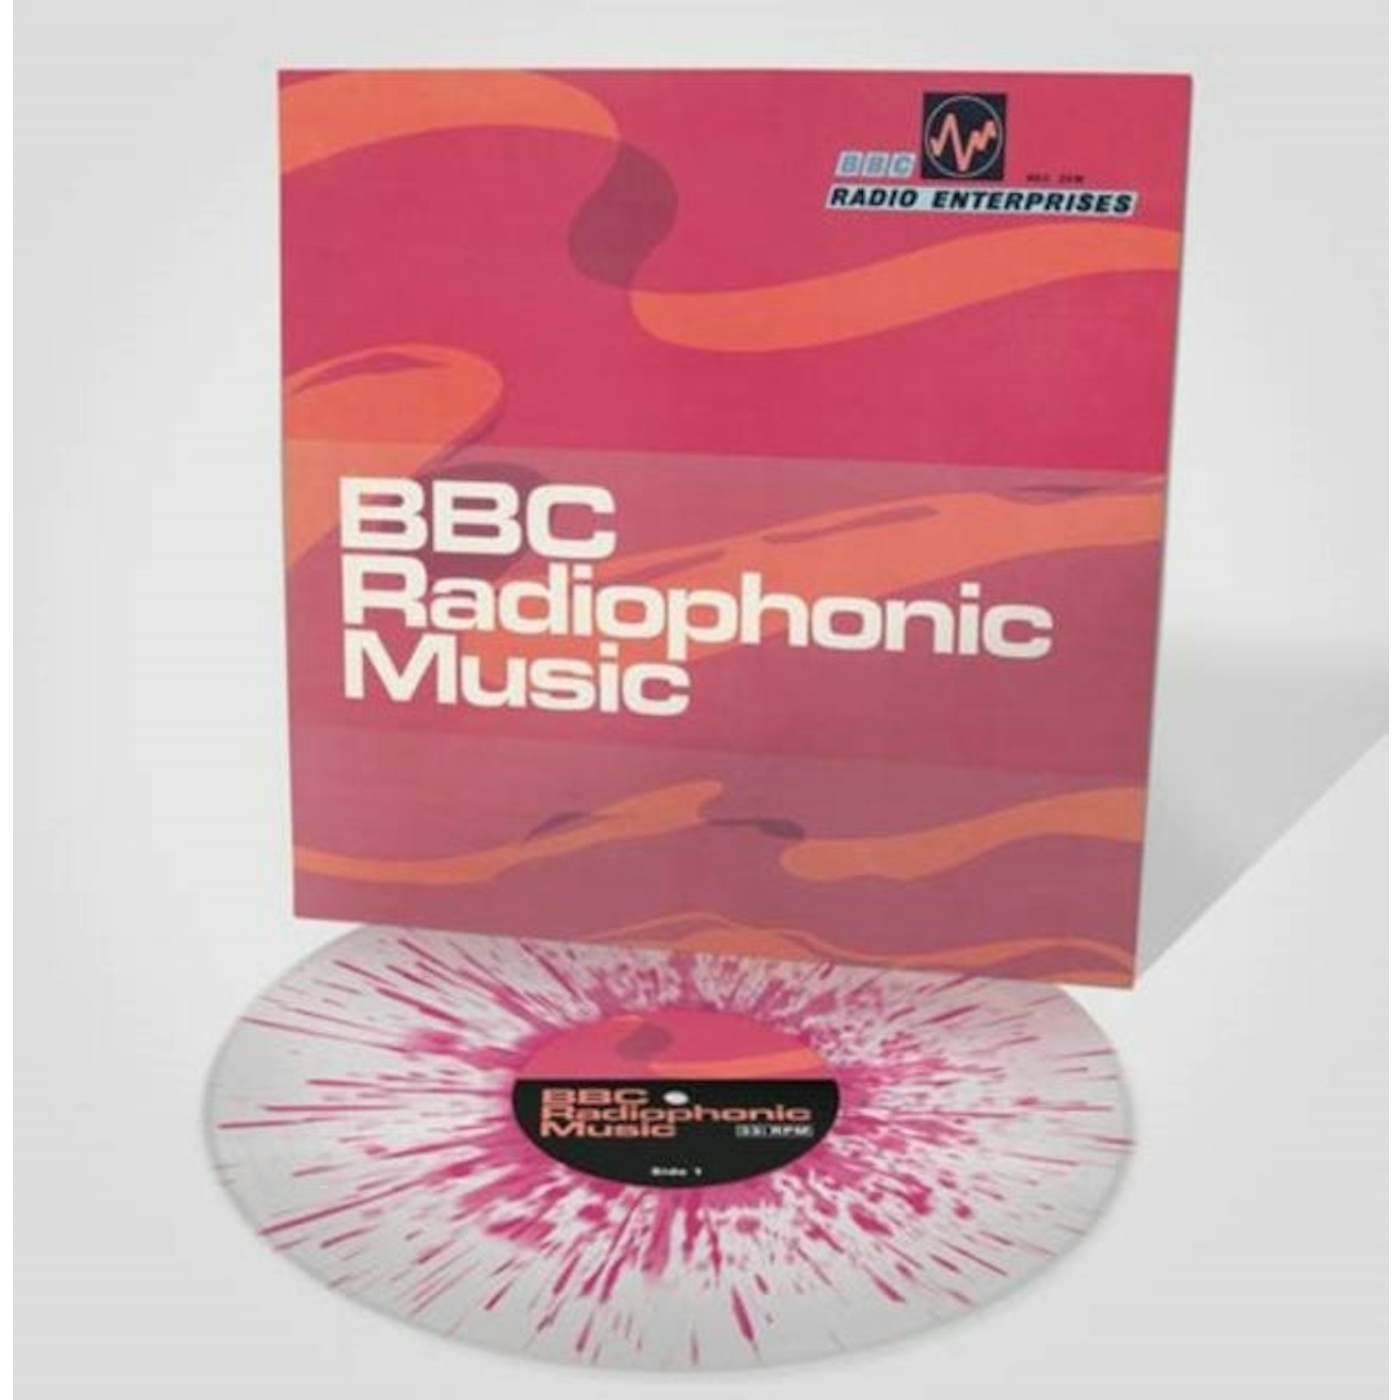 The BBC Radiophonic Workshop LP Vinyl Record  Bbc Radiophonic Music